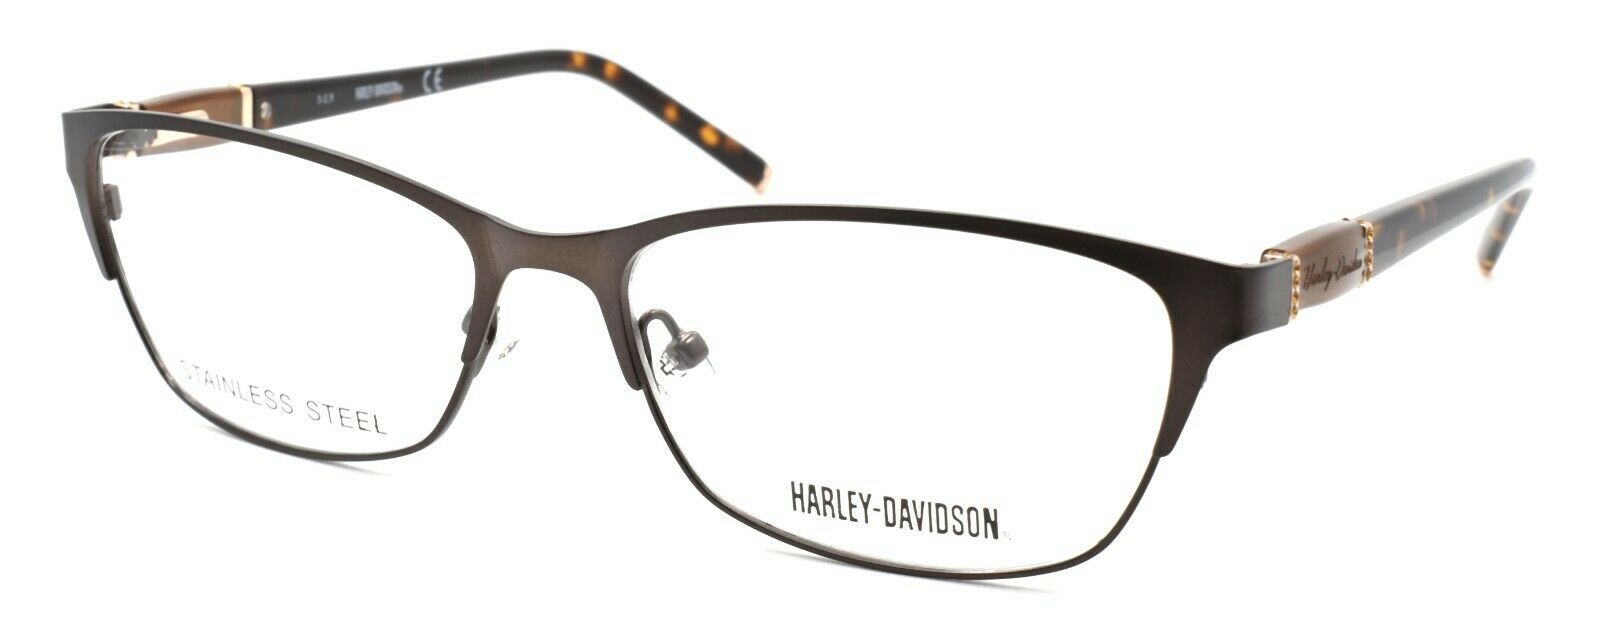 1-Harley Davidson HD0538 049 Women's Eyeglasses Frames 55-16-140 Brown + CASE-664689889112-IKSpecs